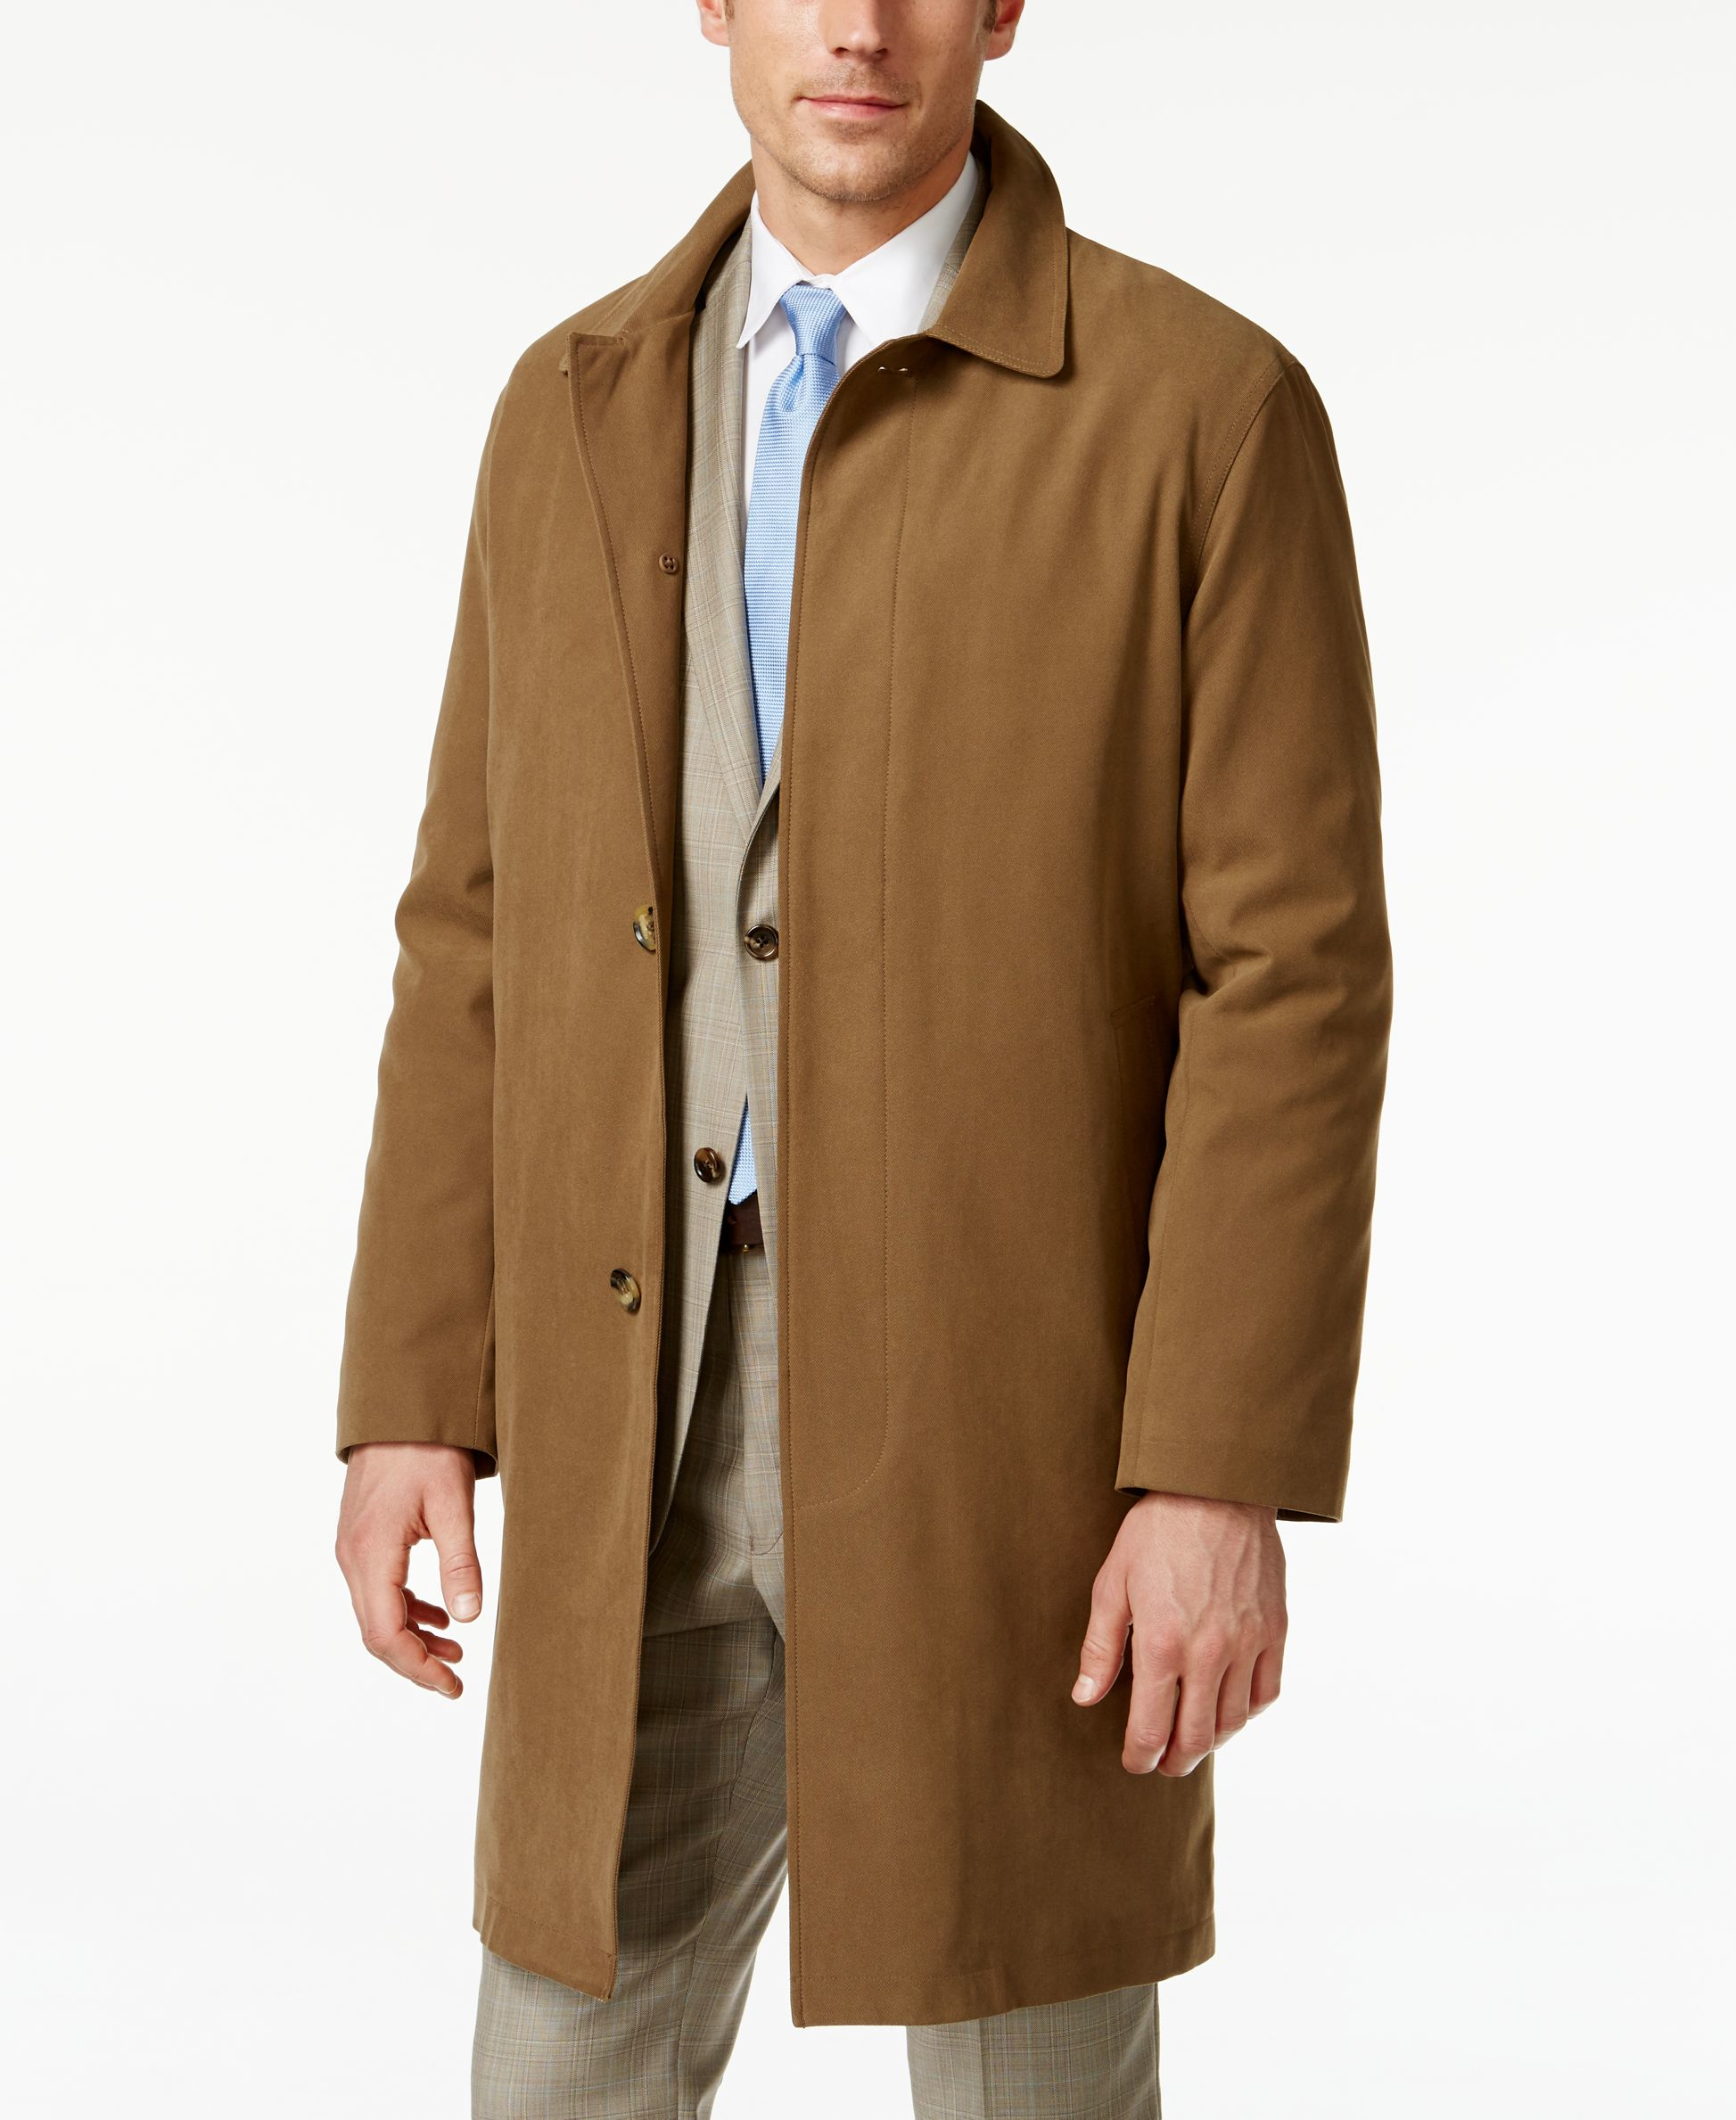 Lyst - London Fog Coat Durham Raincoat in Natural for Men